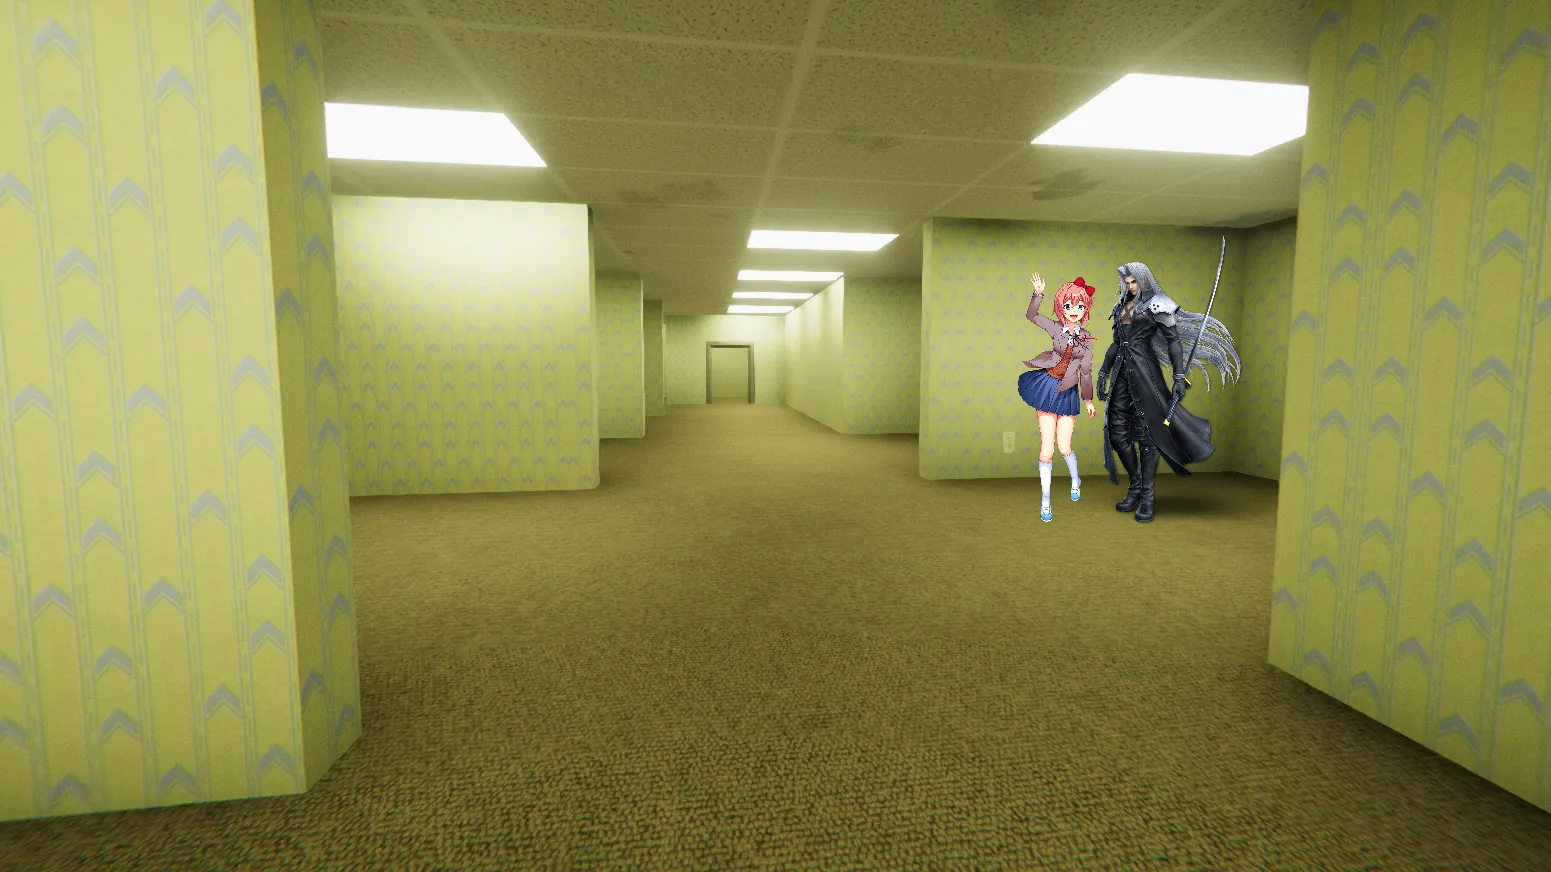 Sayori and Sephiroth Blank Meme Template